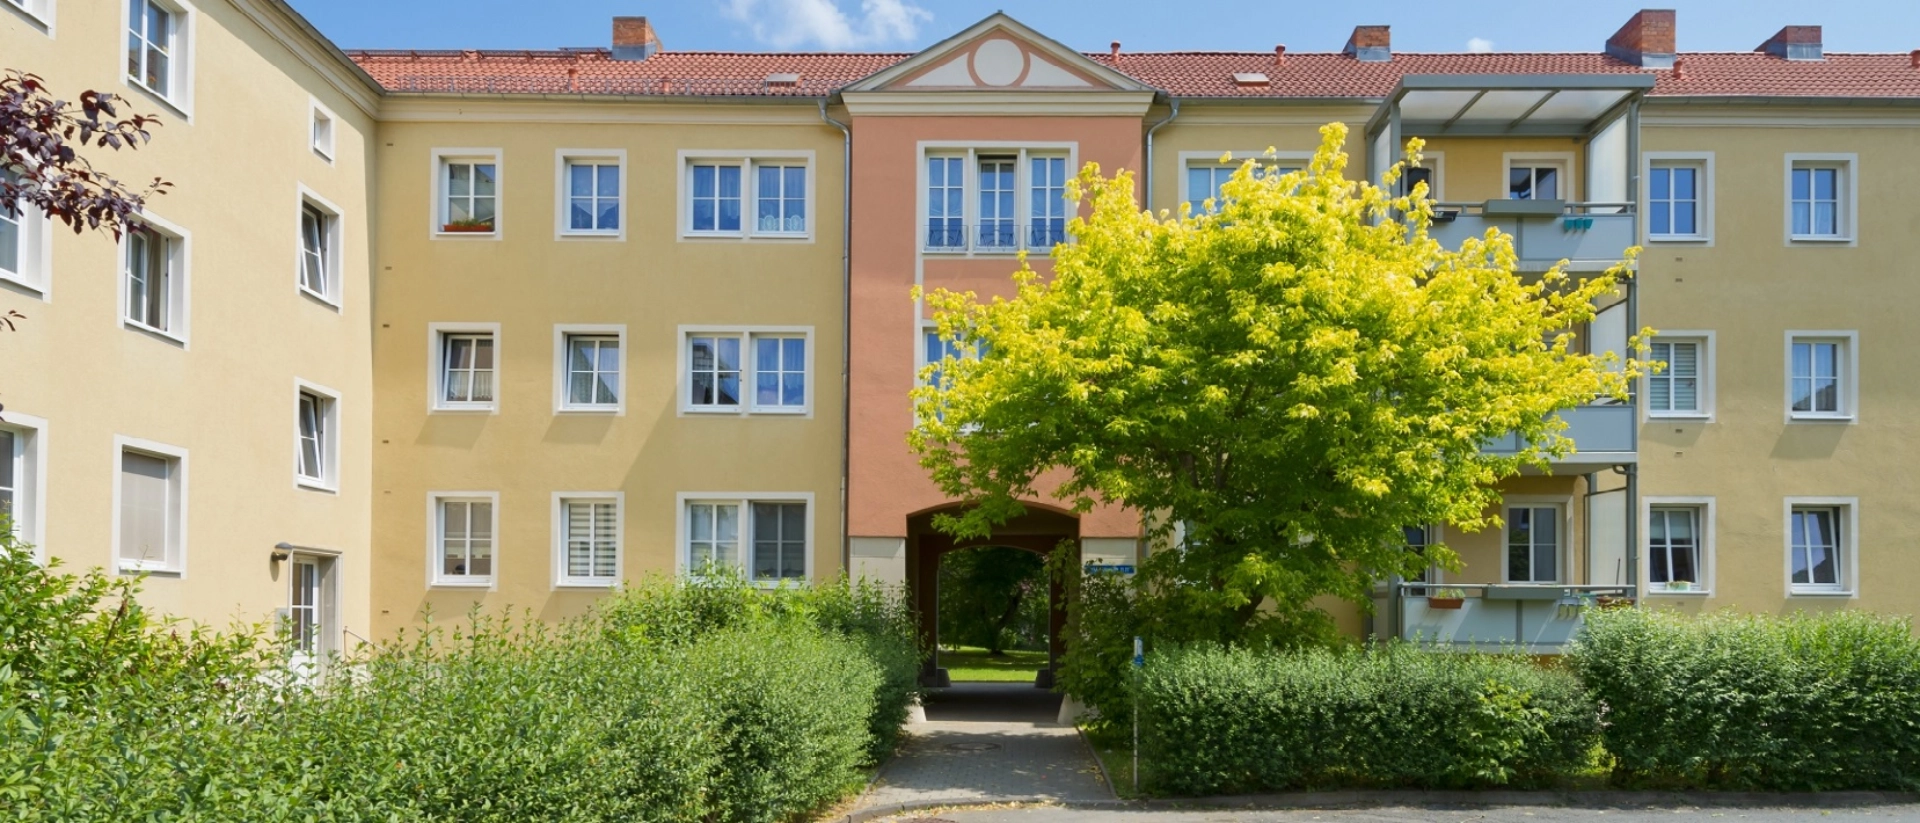 Wohnung in Jena Ost - Innenhof